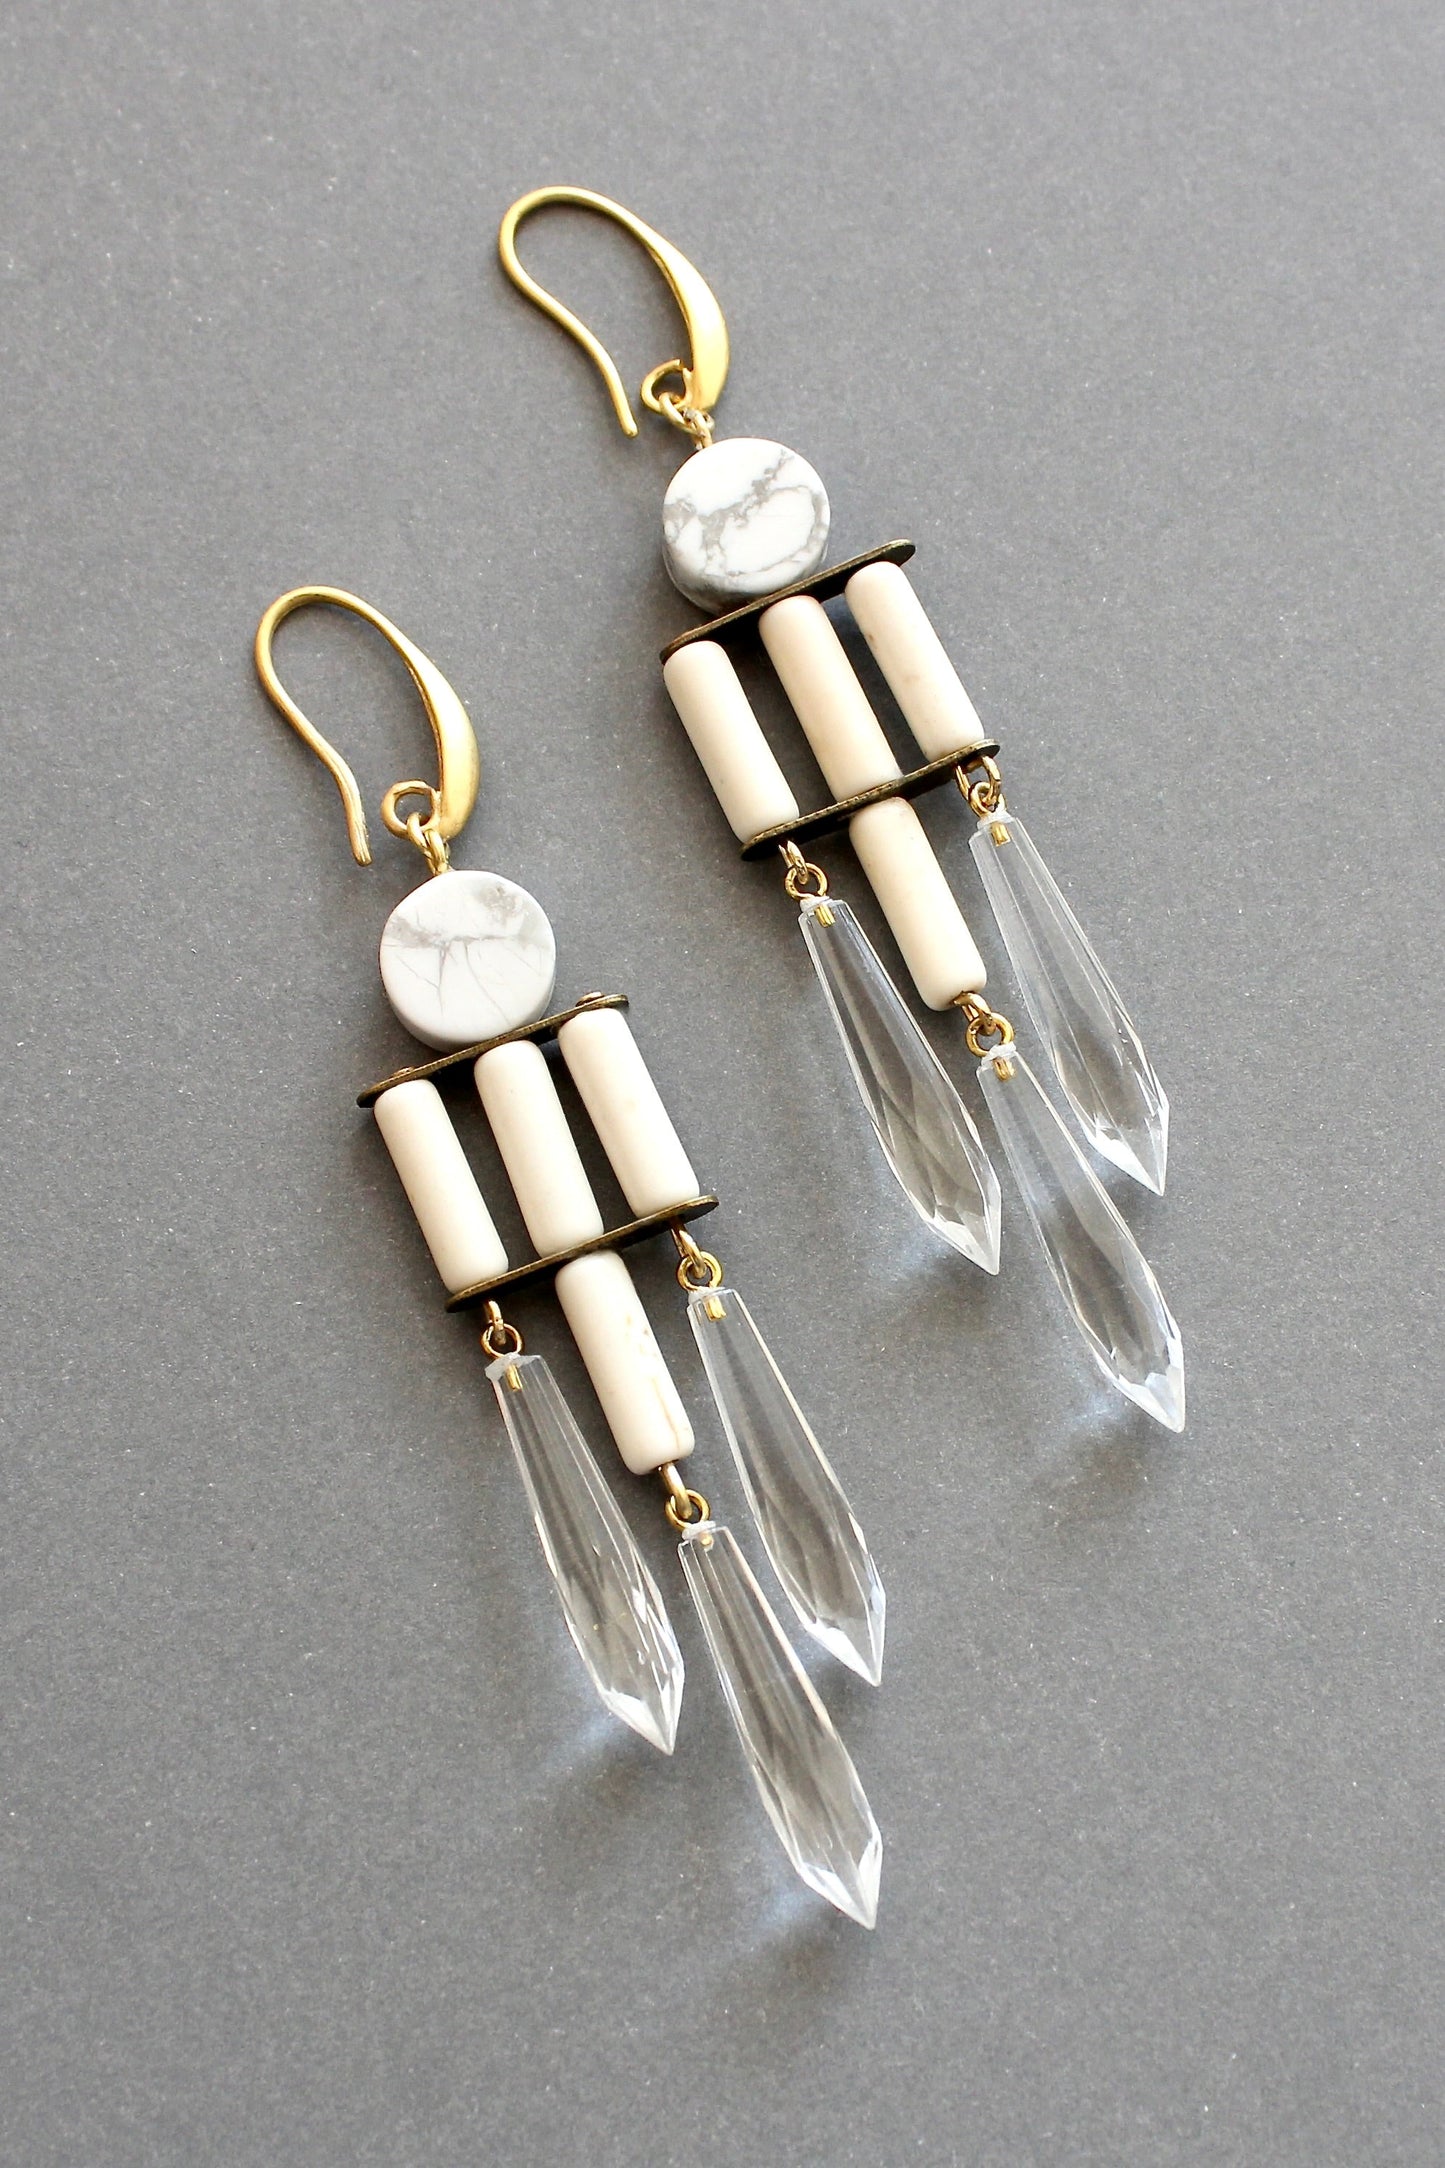 ISLE49 White and crystal geometric chandelier earrings